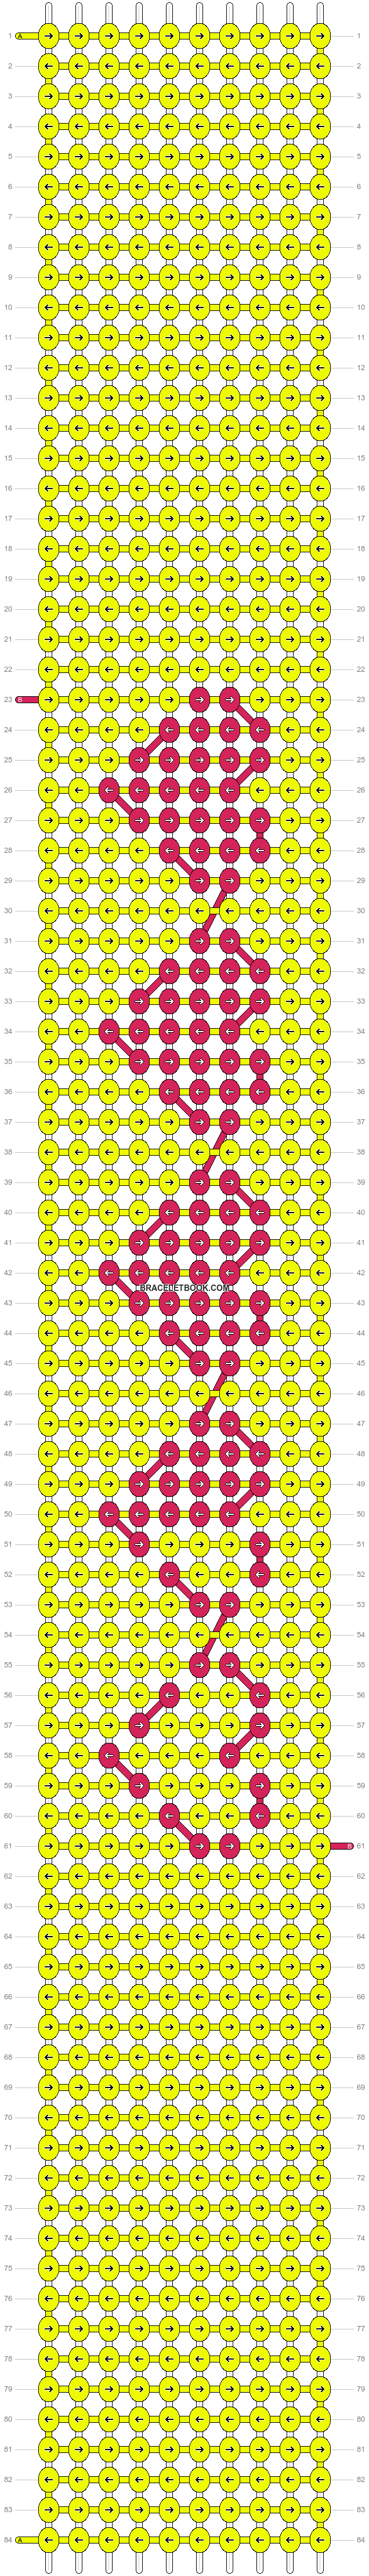 Alpha pattern #17376 variation #35293 pattern